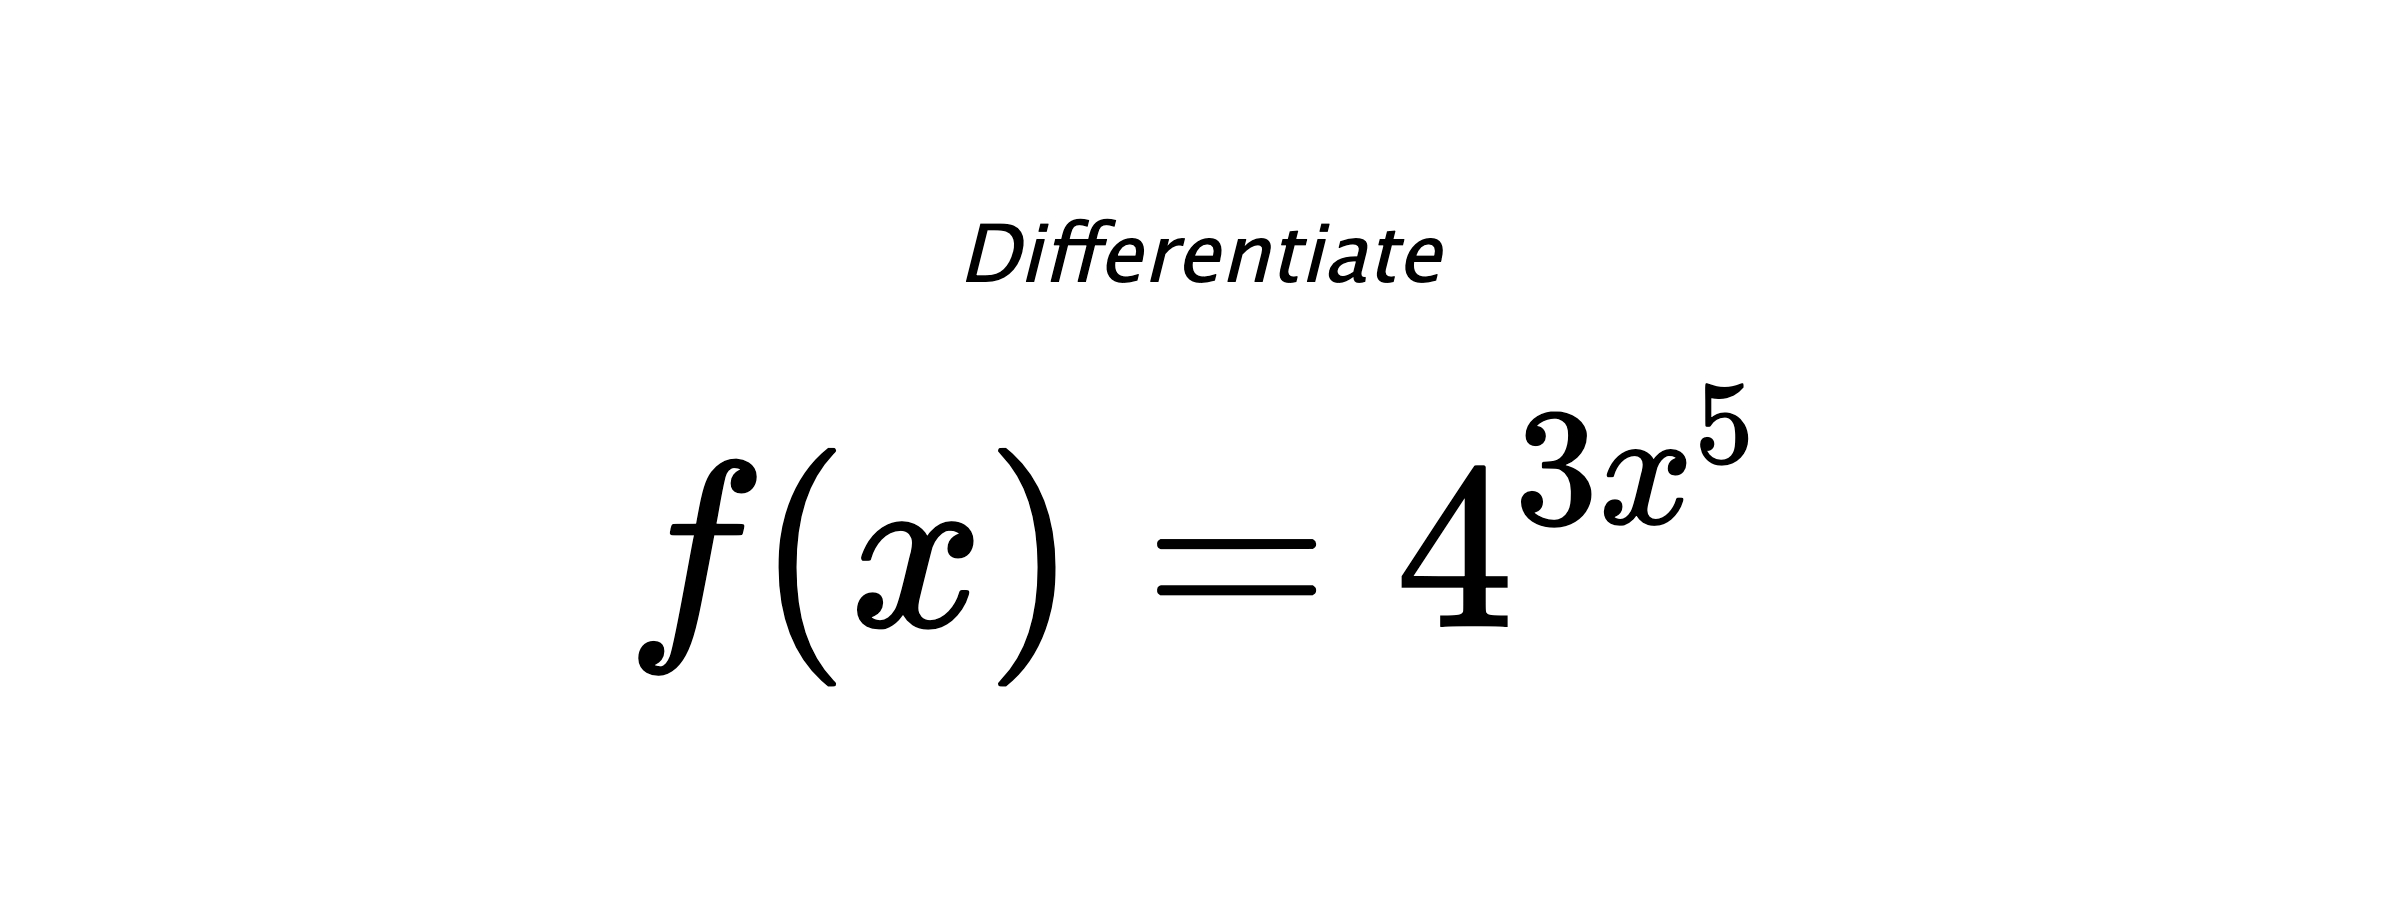 Differentiate $ f(x) = 4^{3 x^{5}} $